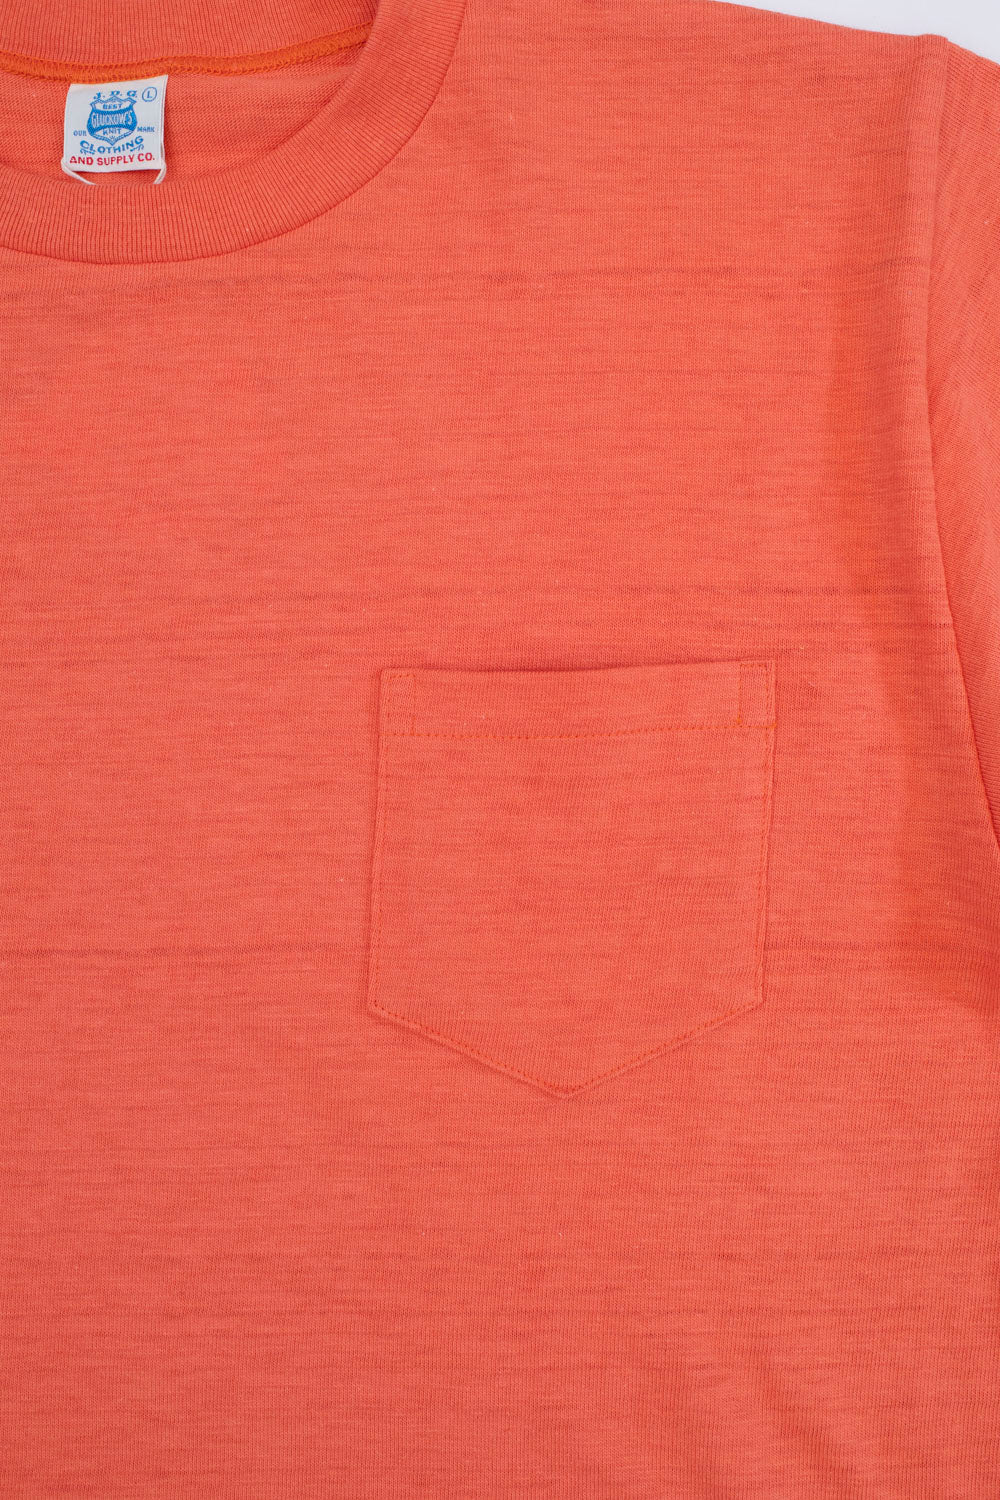 Lot JG-CS07 - Slubby Keeper T-Shirt - Orange